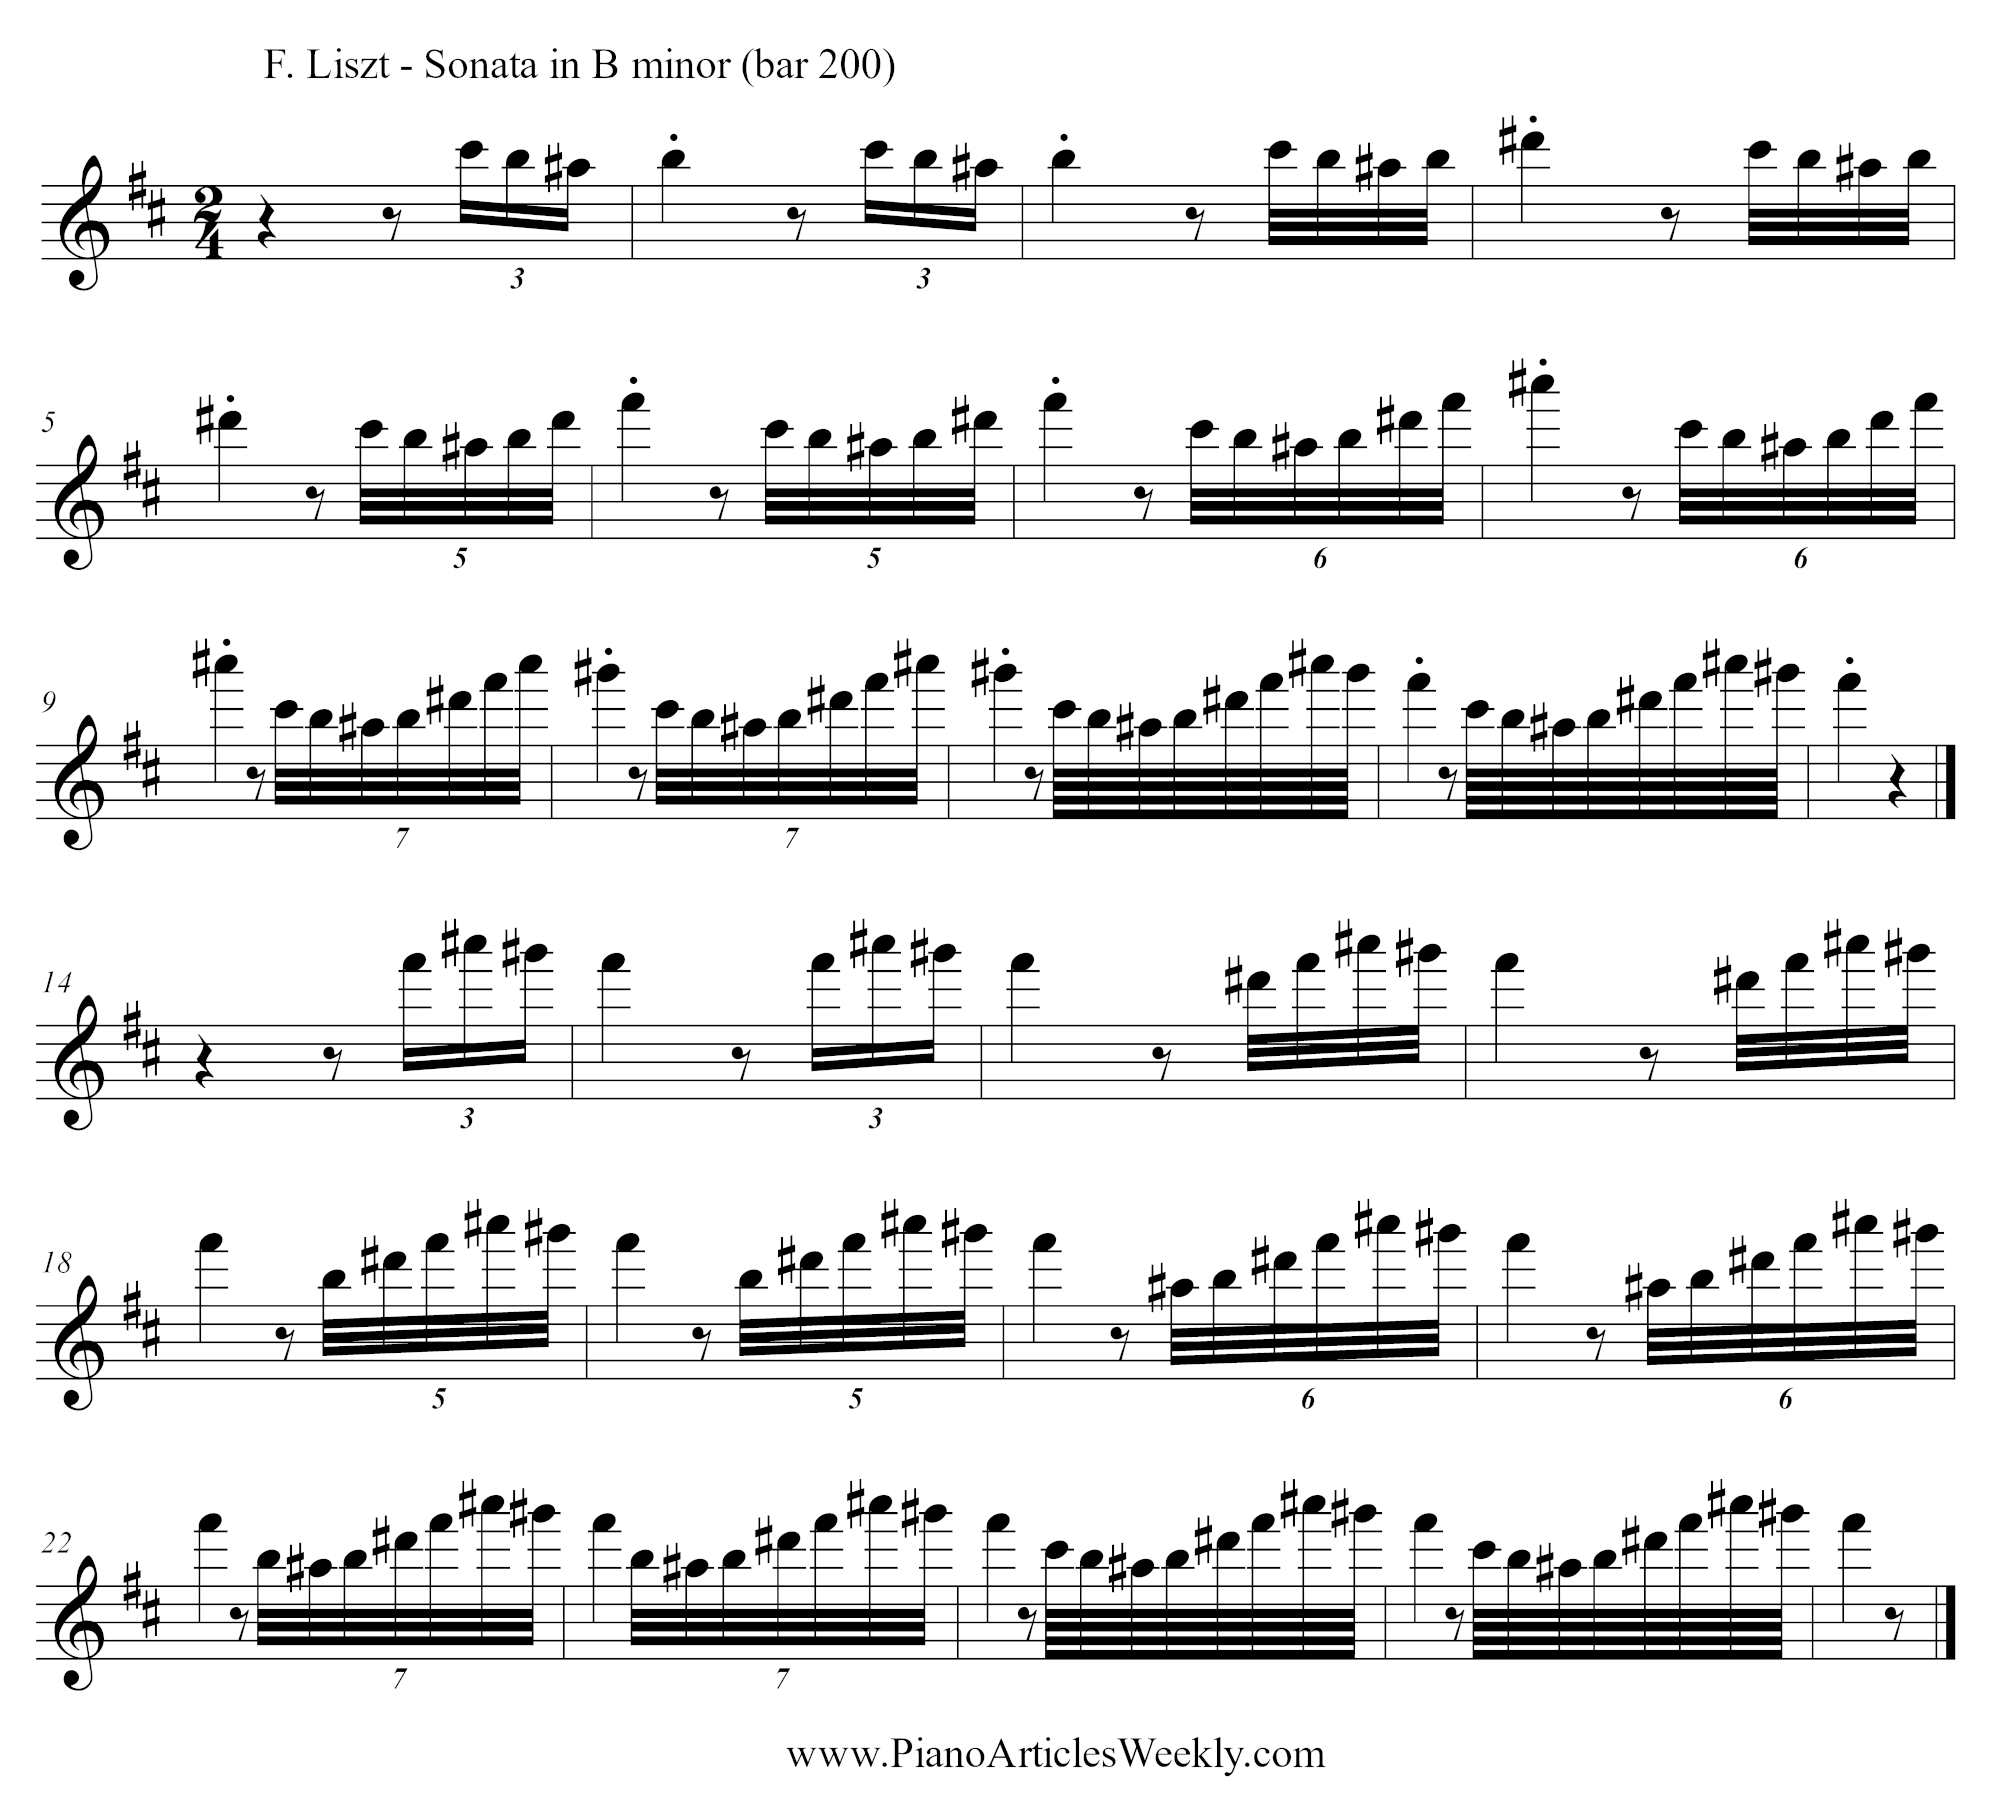 Liszt Sonata in B minor practicing bar 200